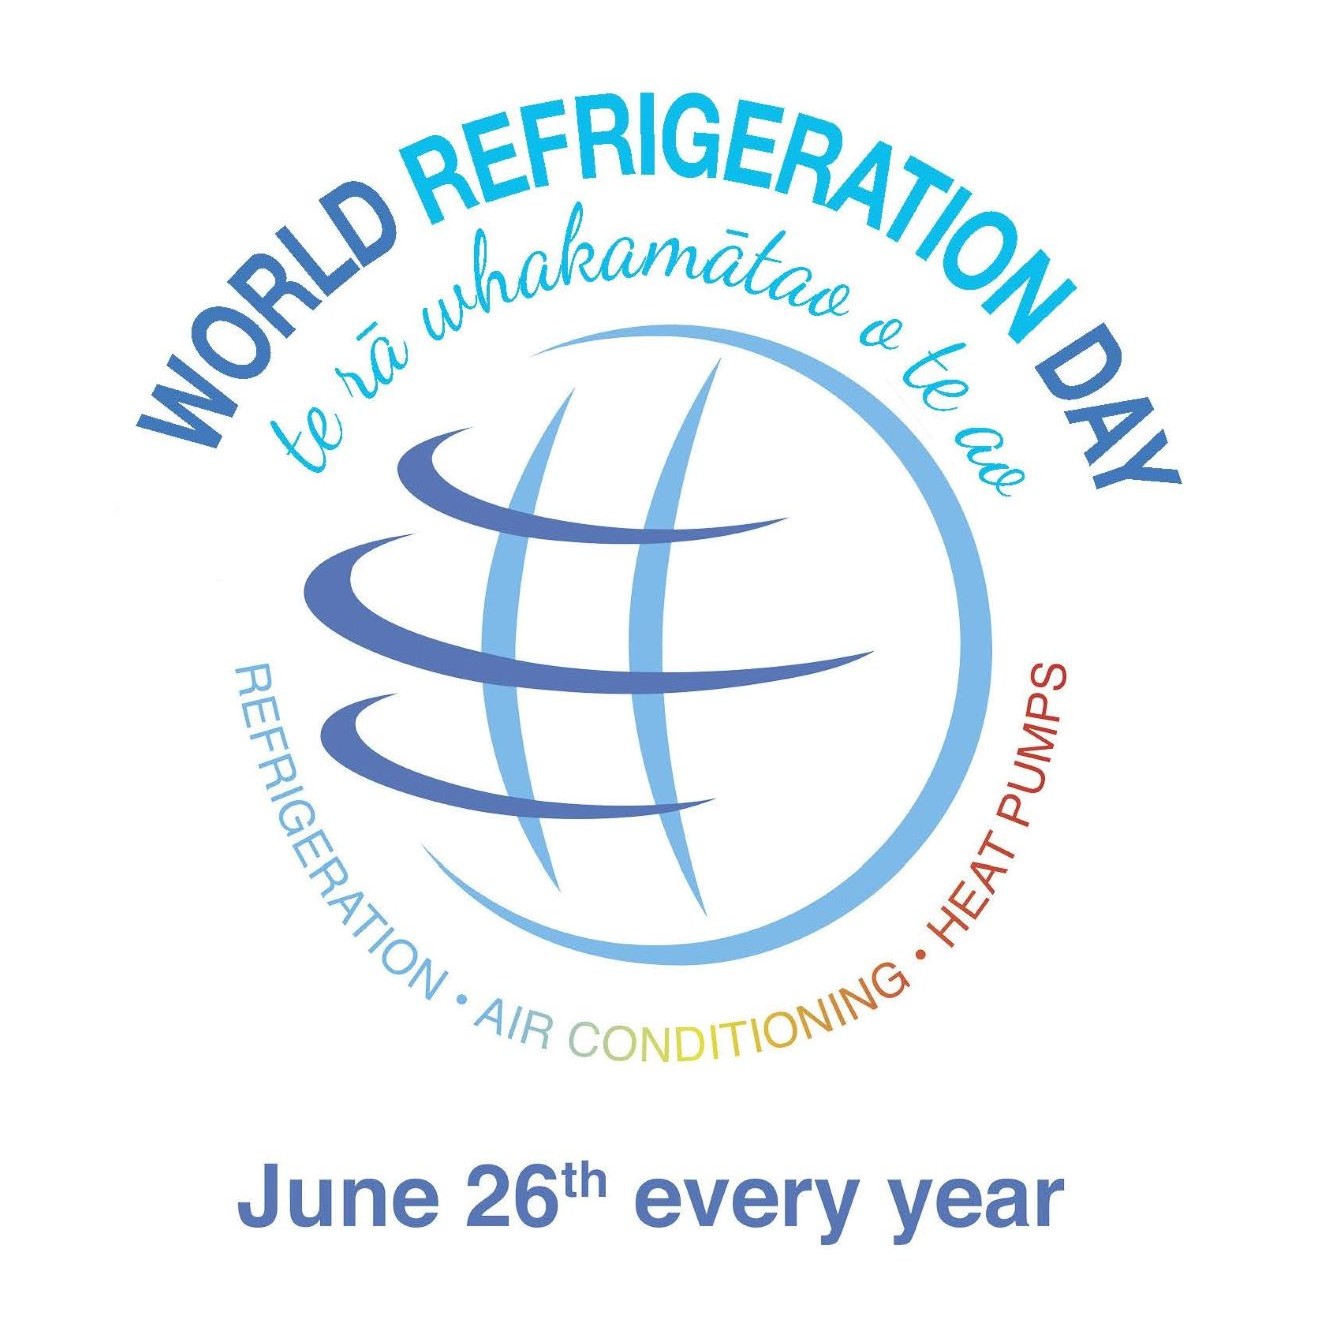 World Refrigeration Day